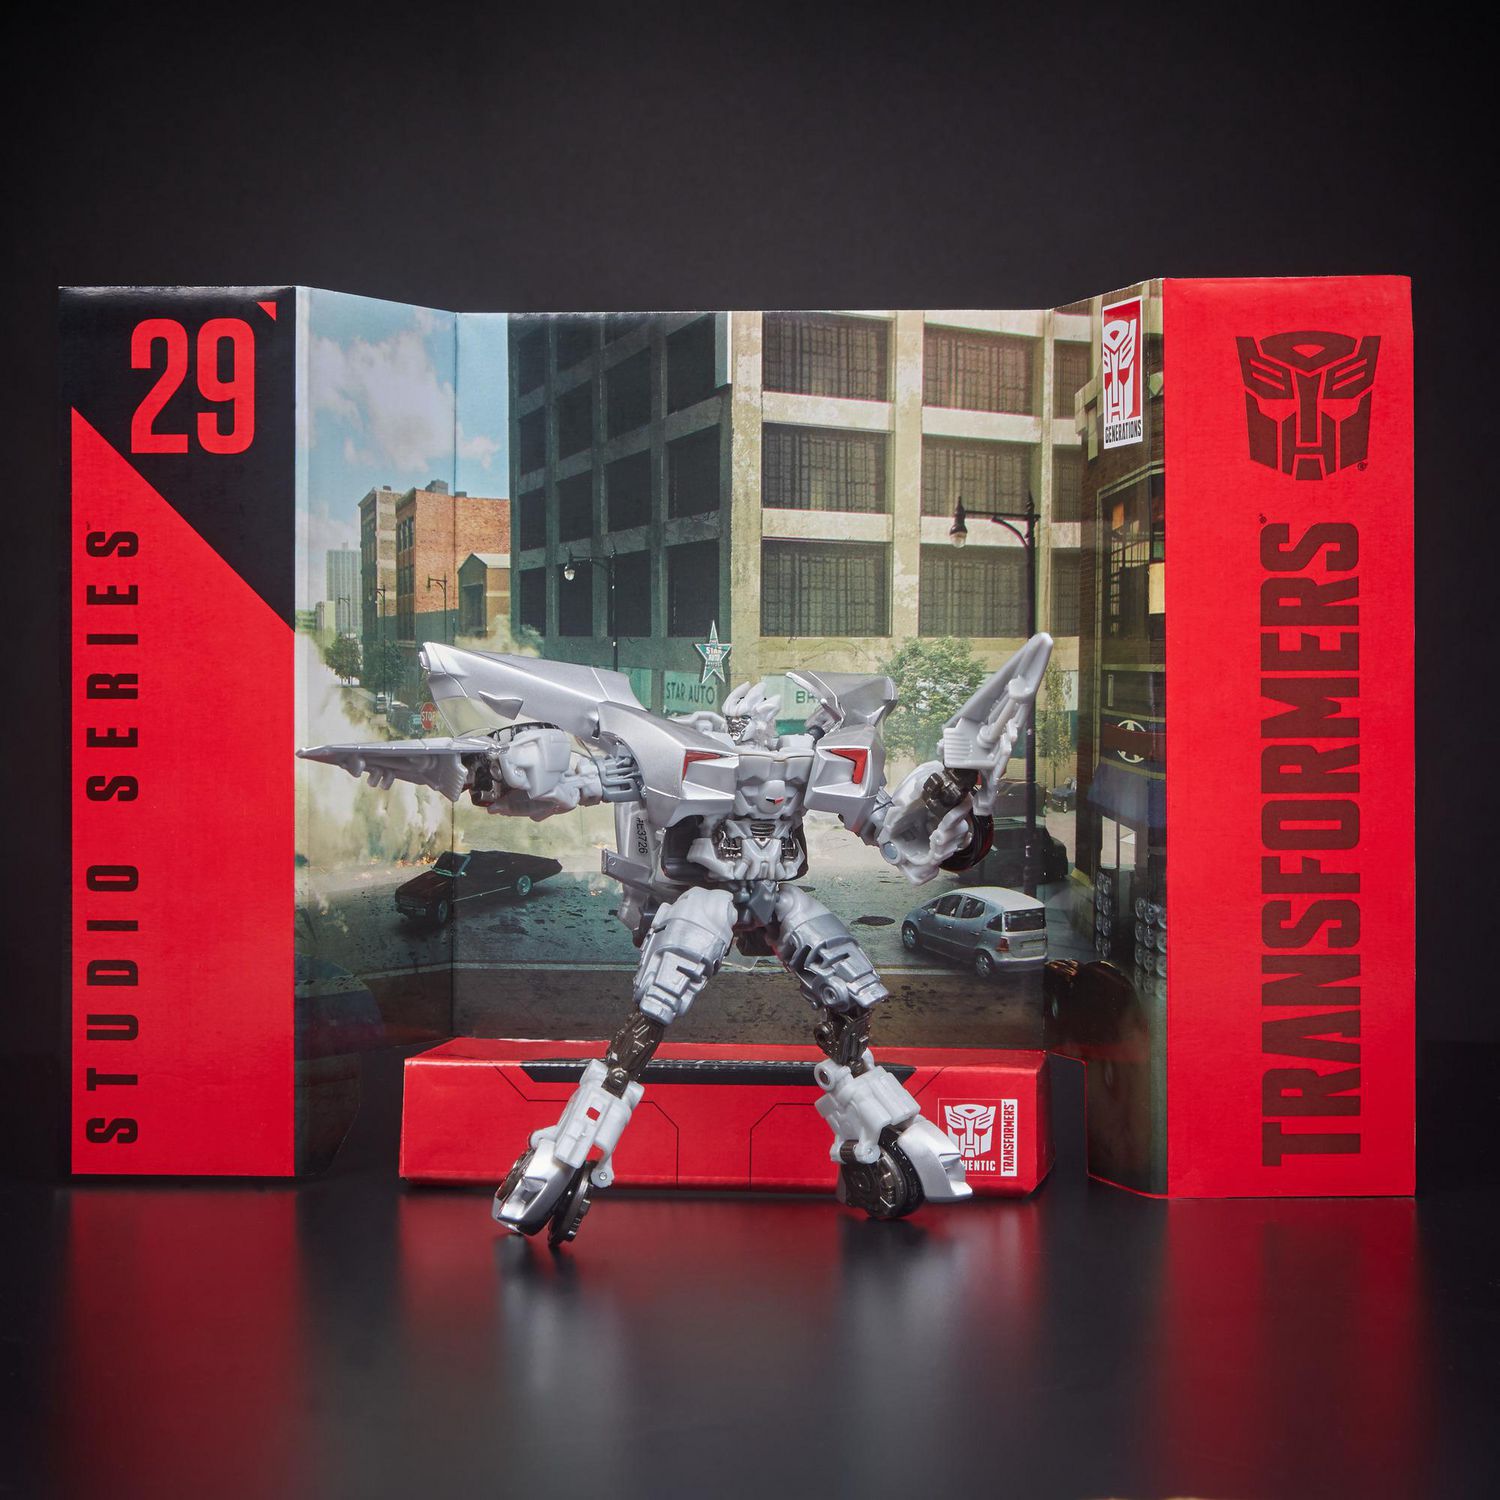 New in stock Transformers Studio Series 29 Deluxe Sideswipe 